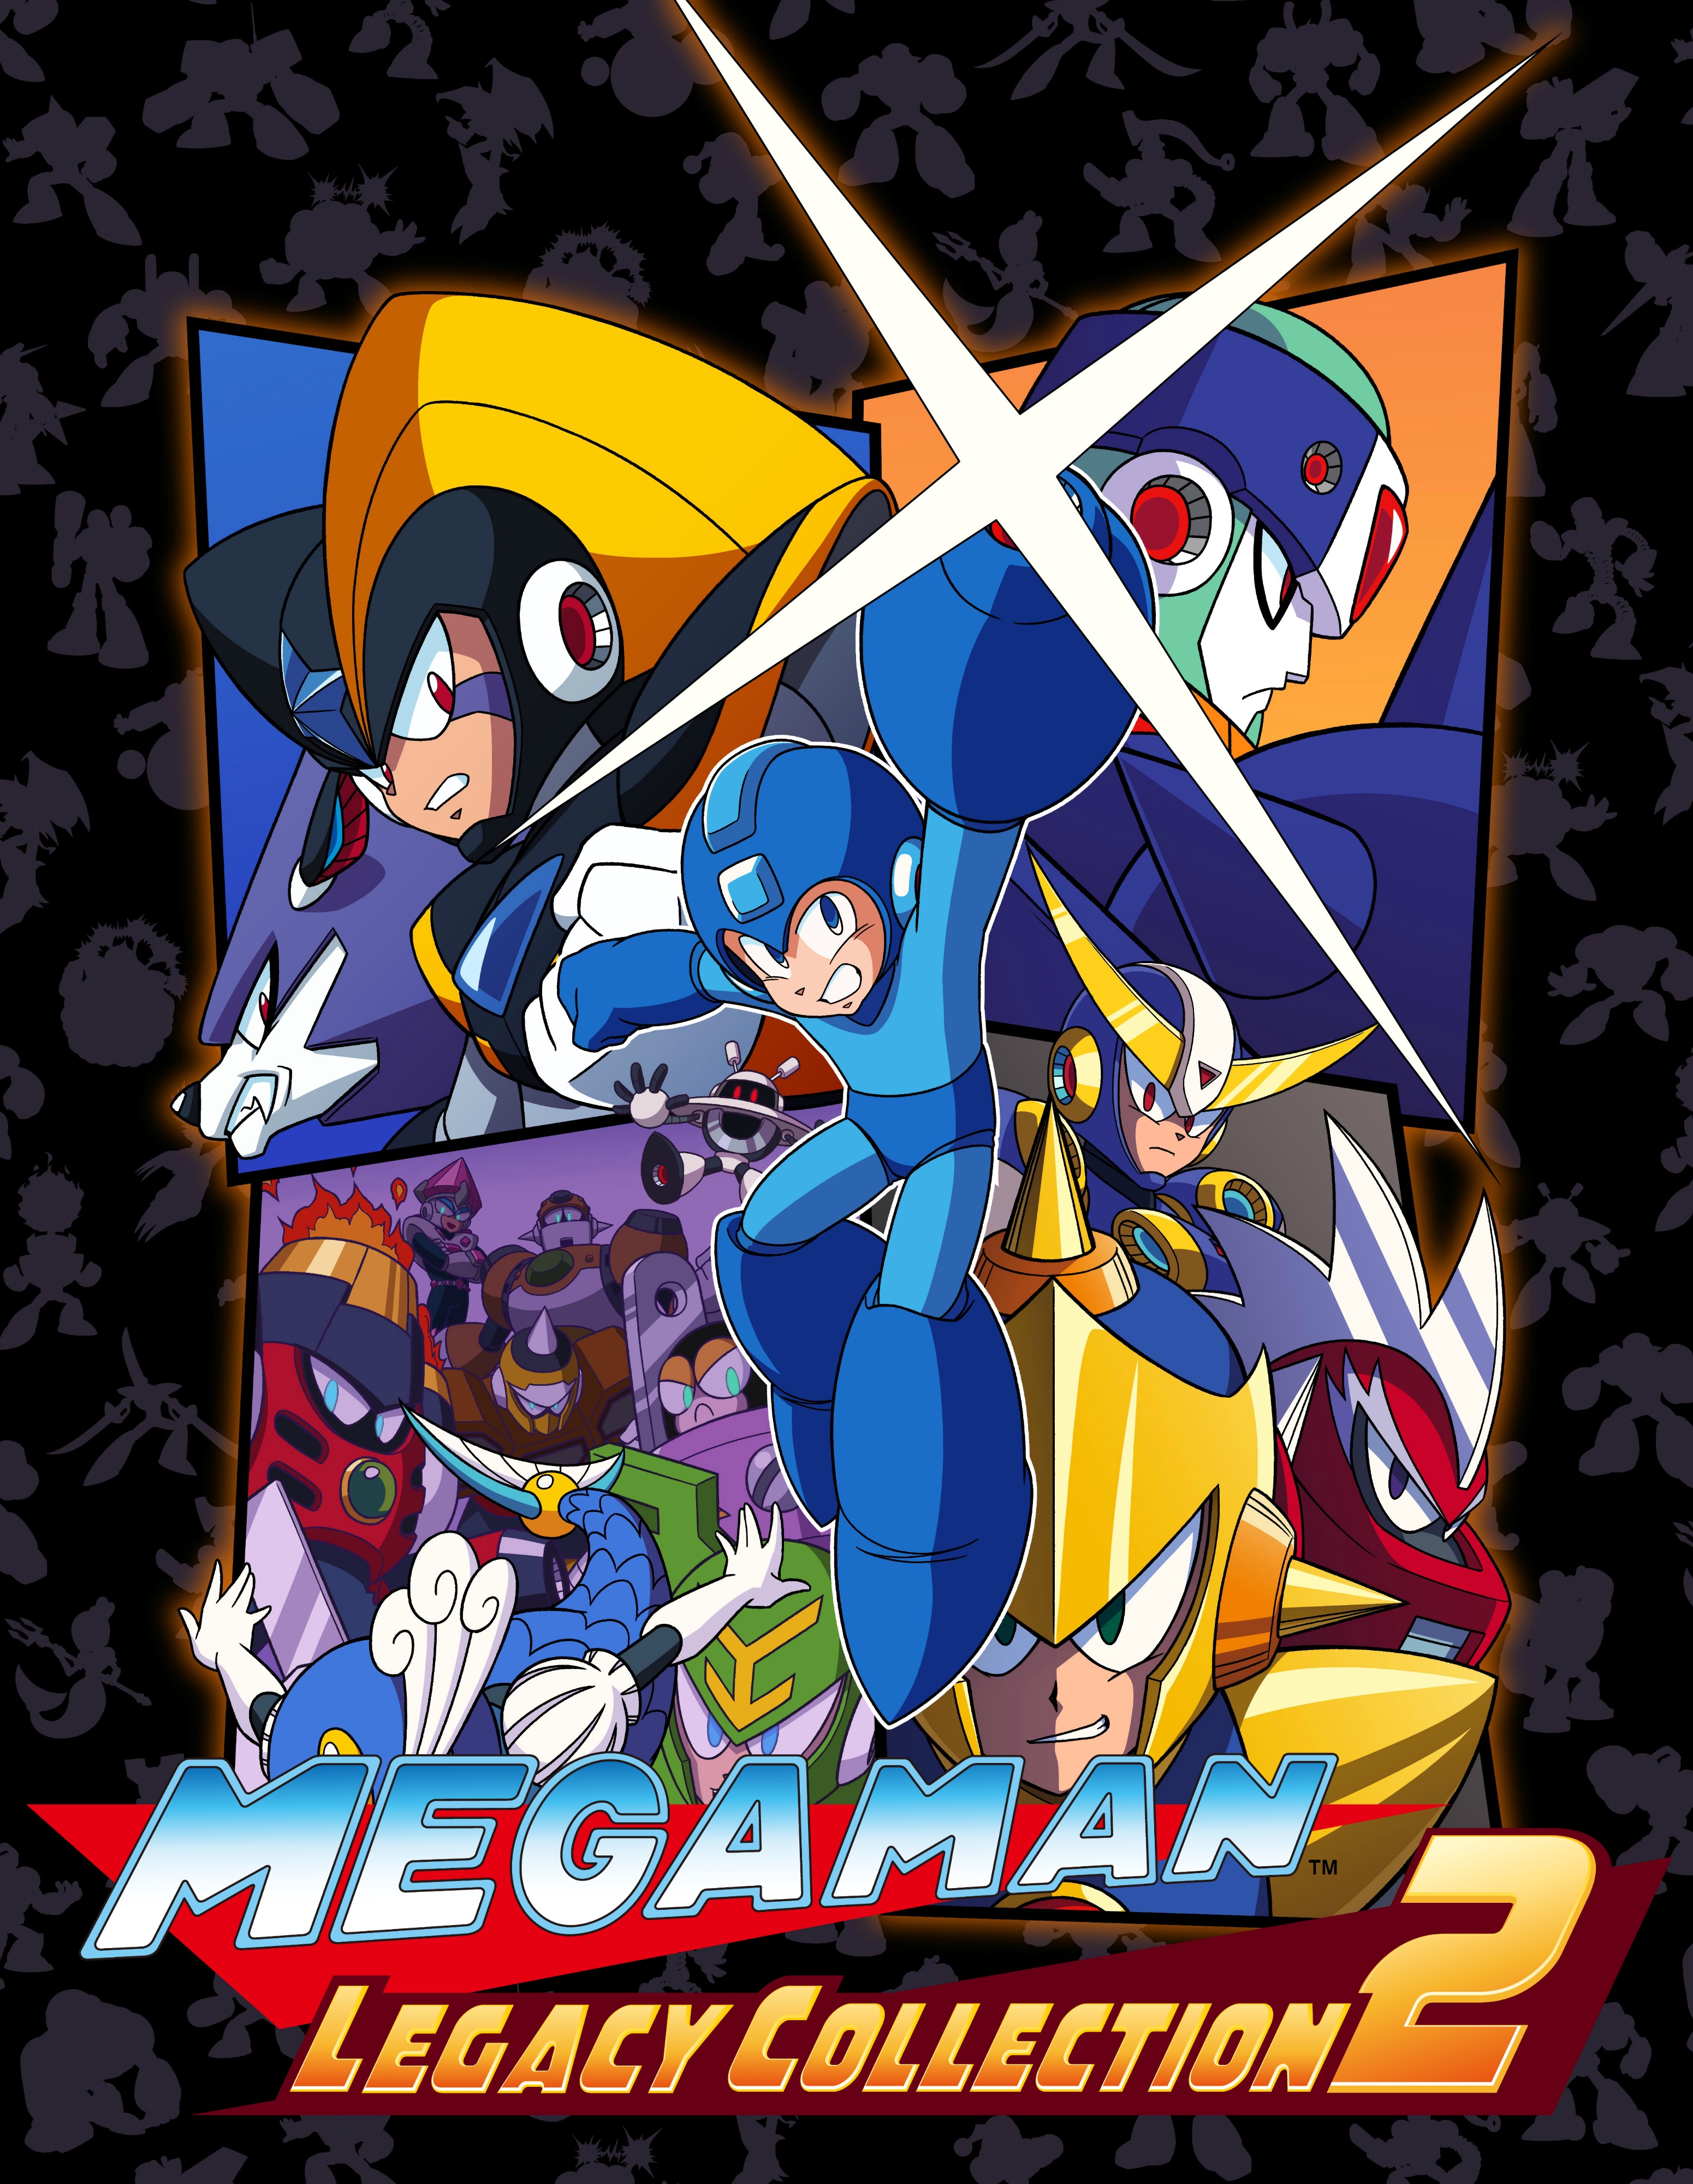 Megaman legacy collection. Mega man Legacy collection 2. Mega man Legacy collection. Mega man Legacy collection 2 ps4. Mega man Legacy collection 2 (2017).